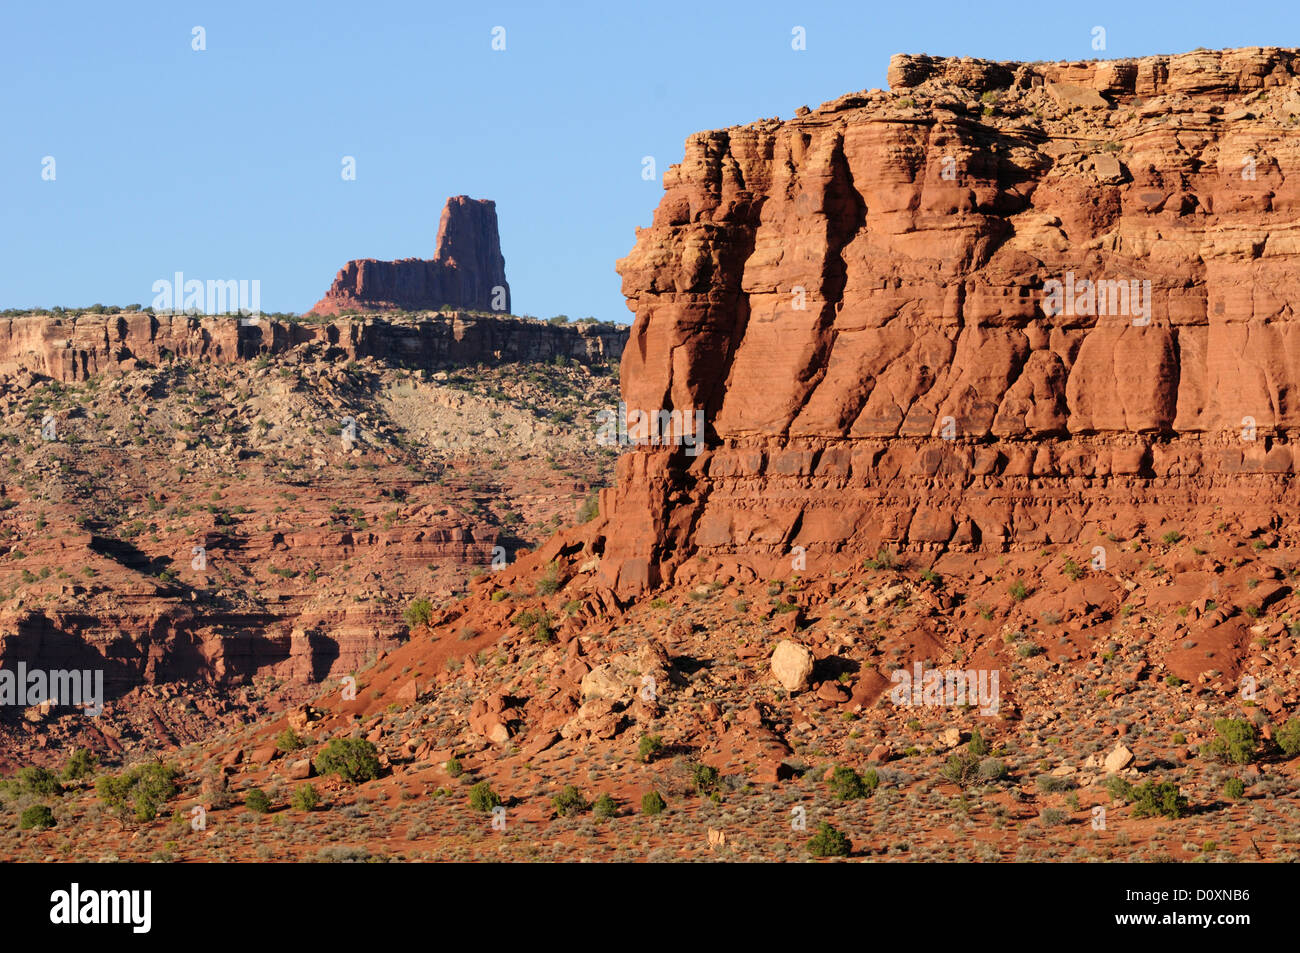 America, USA, United States, Four Corners, Colorado Plateau, Utah, red rocks, sandstone, desert Stock Photo